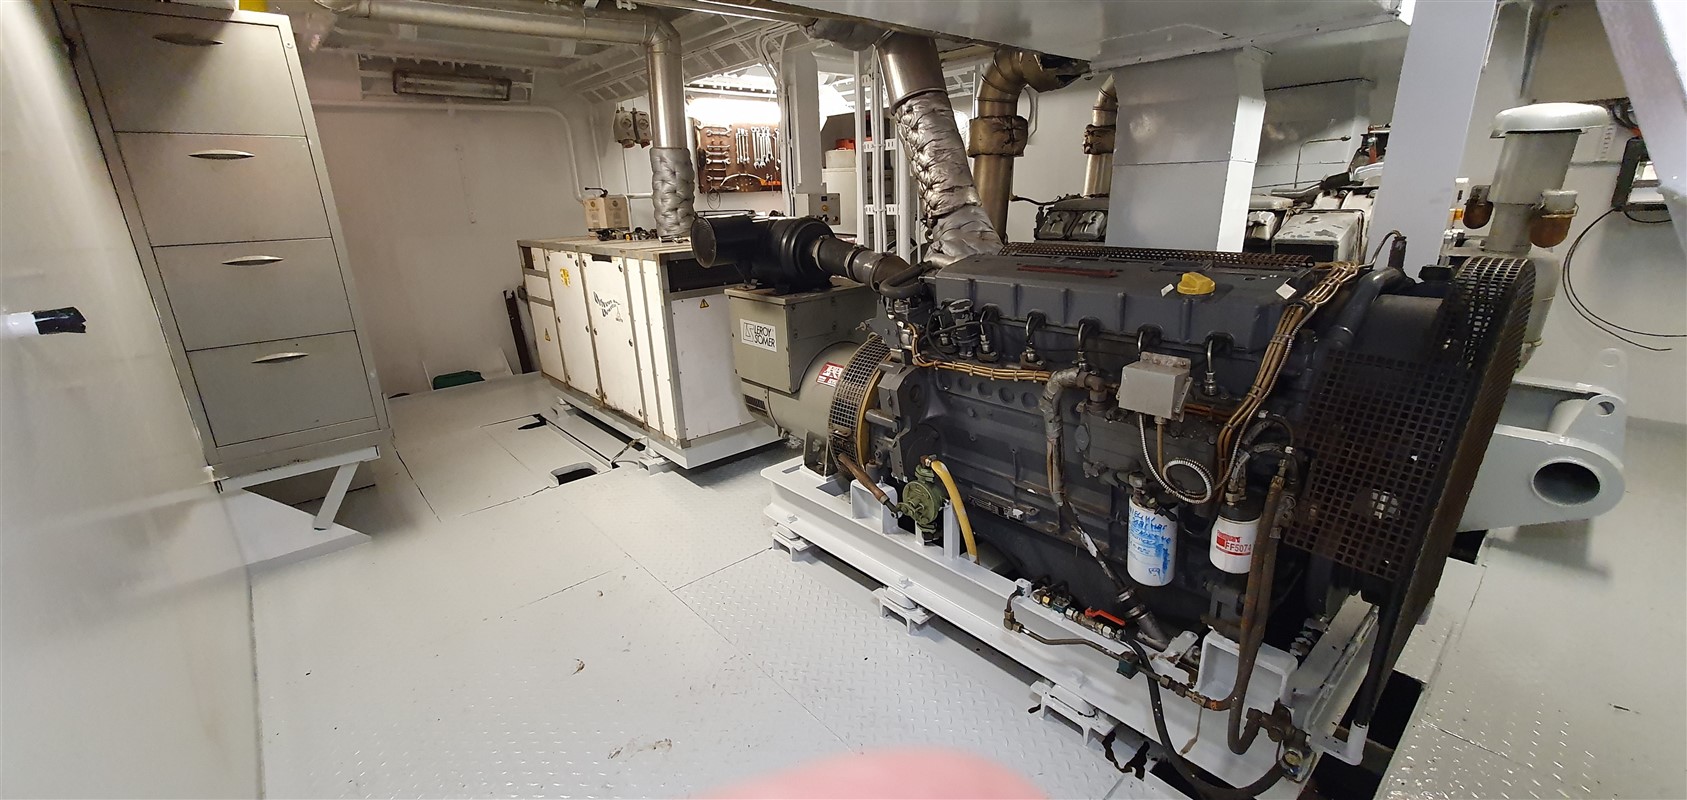 Engine room - Generators  1x 150 / 1 x 125 / 1 x 15 kVA and shore connection.